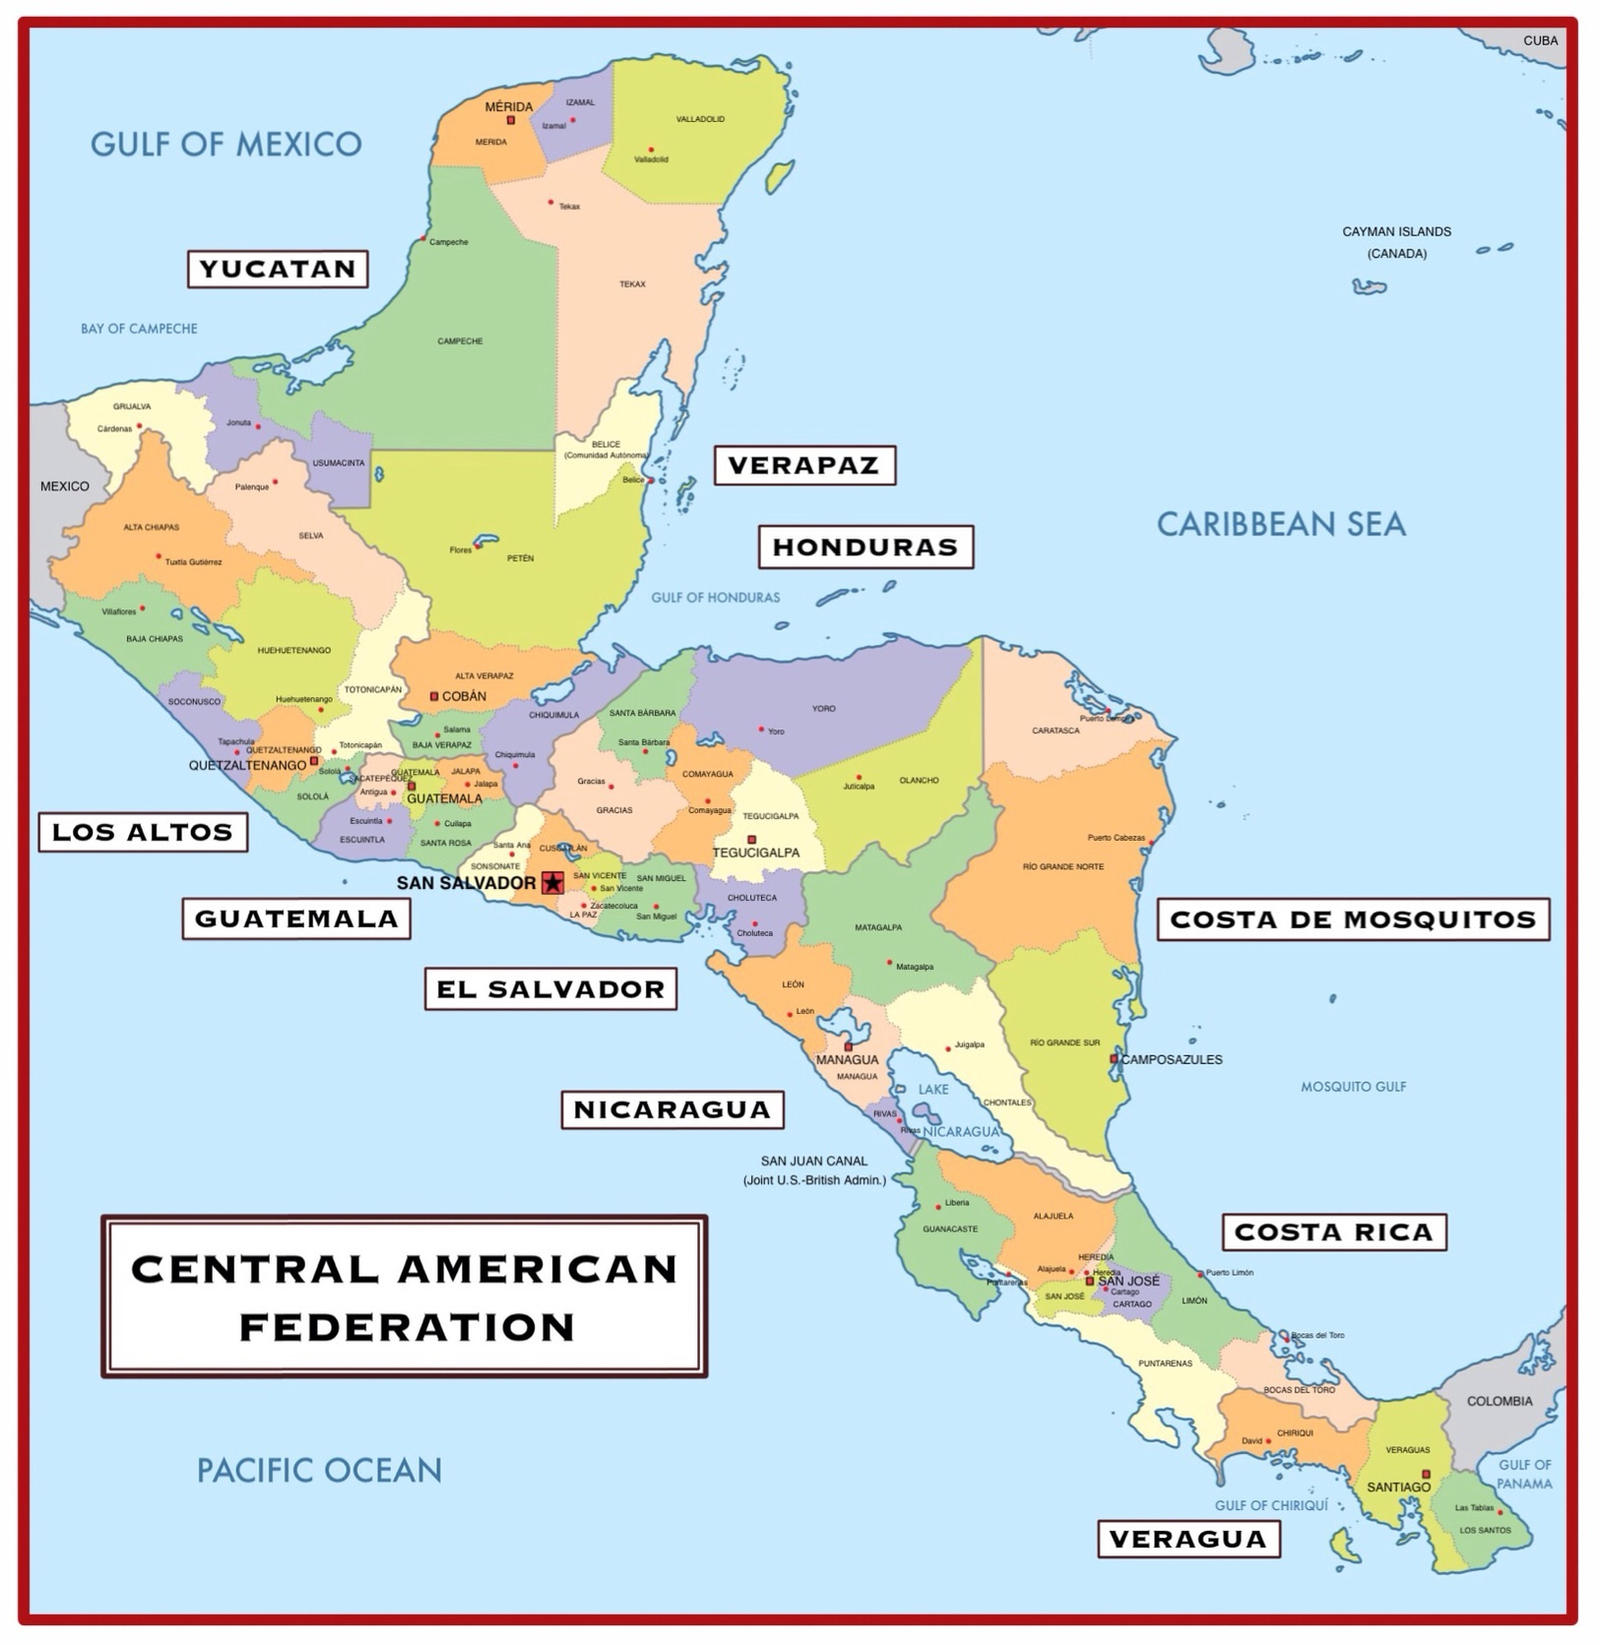 Central American Federation (iPad Idea #18)